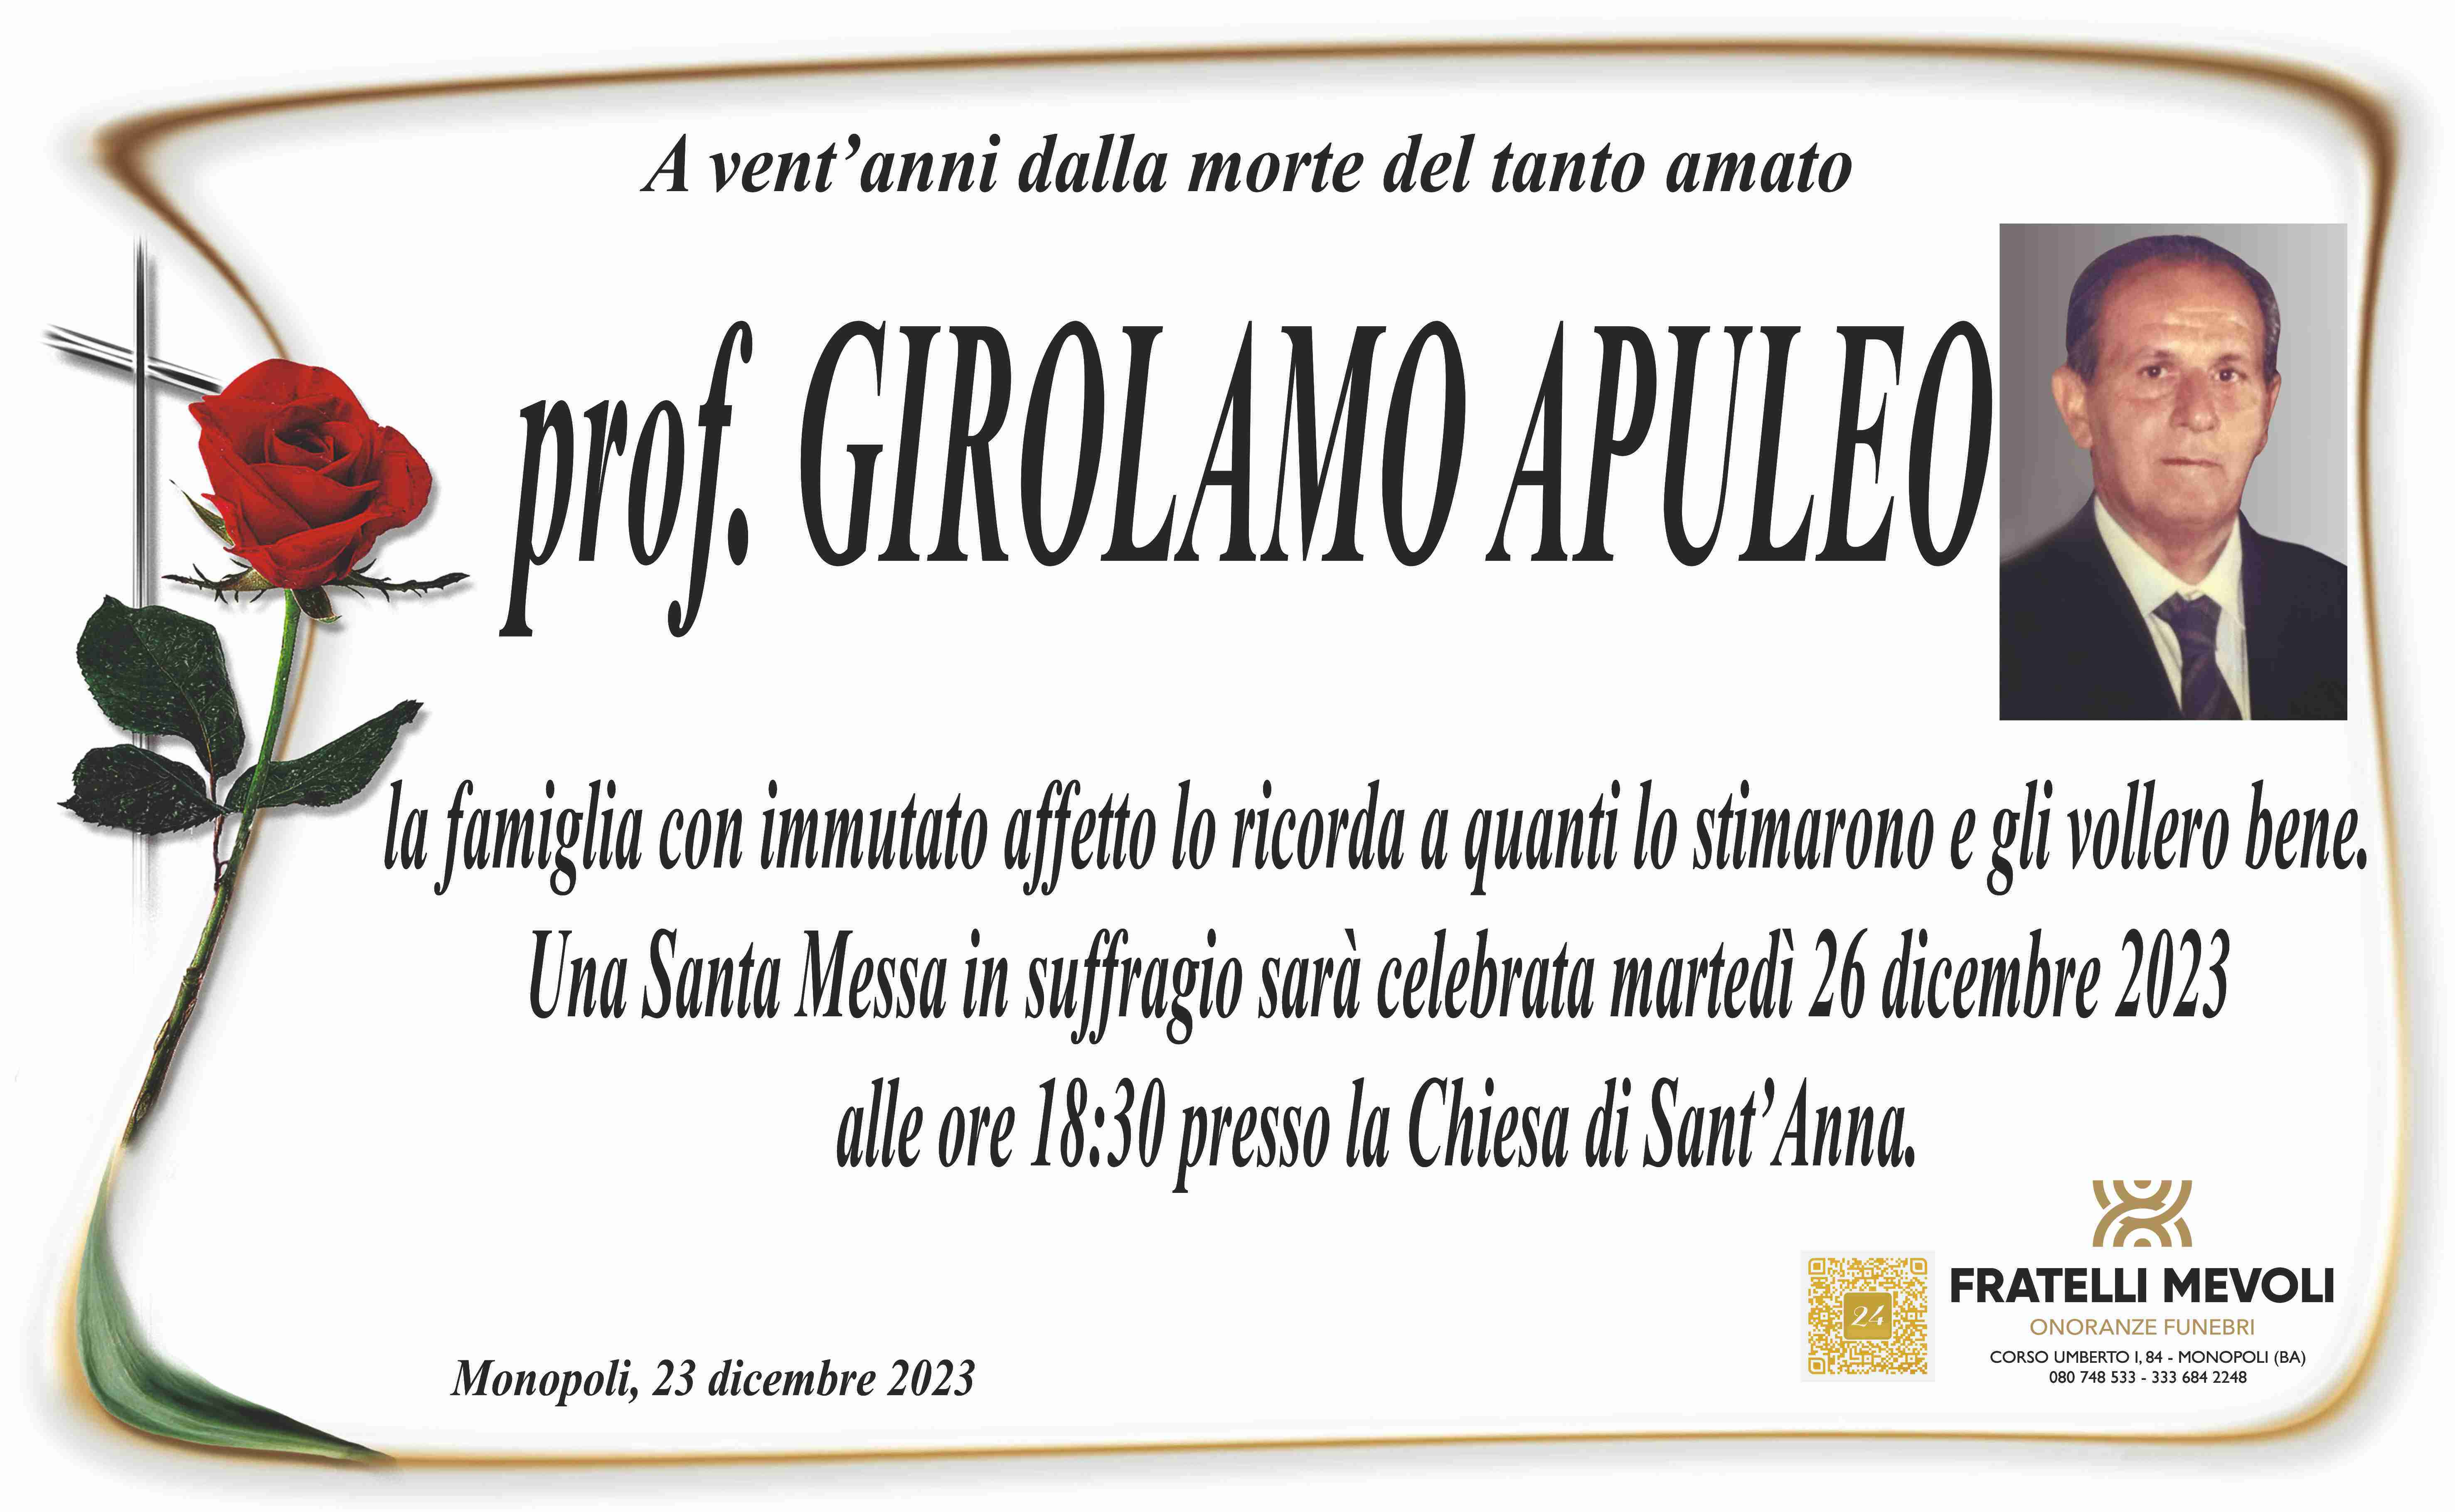 Girolamo Apuleo